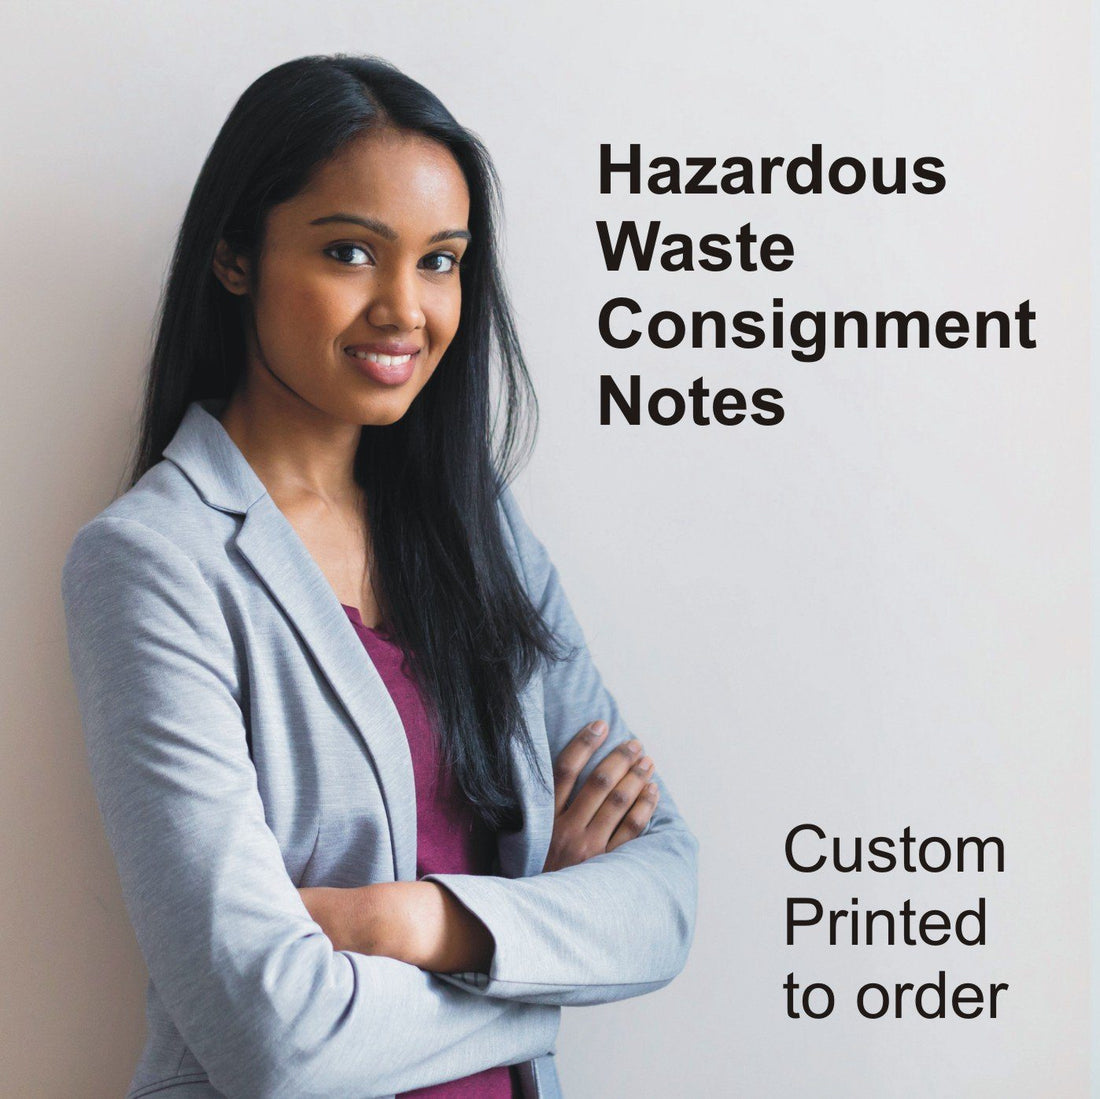 We Print Hazardous Waste Consignment Notes